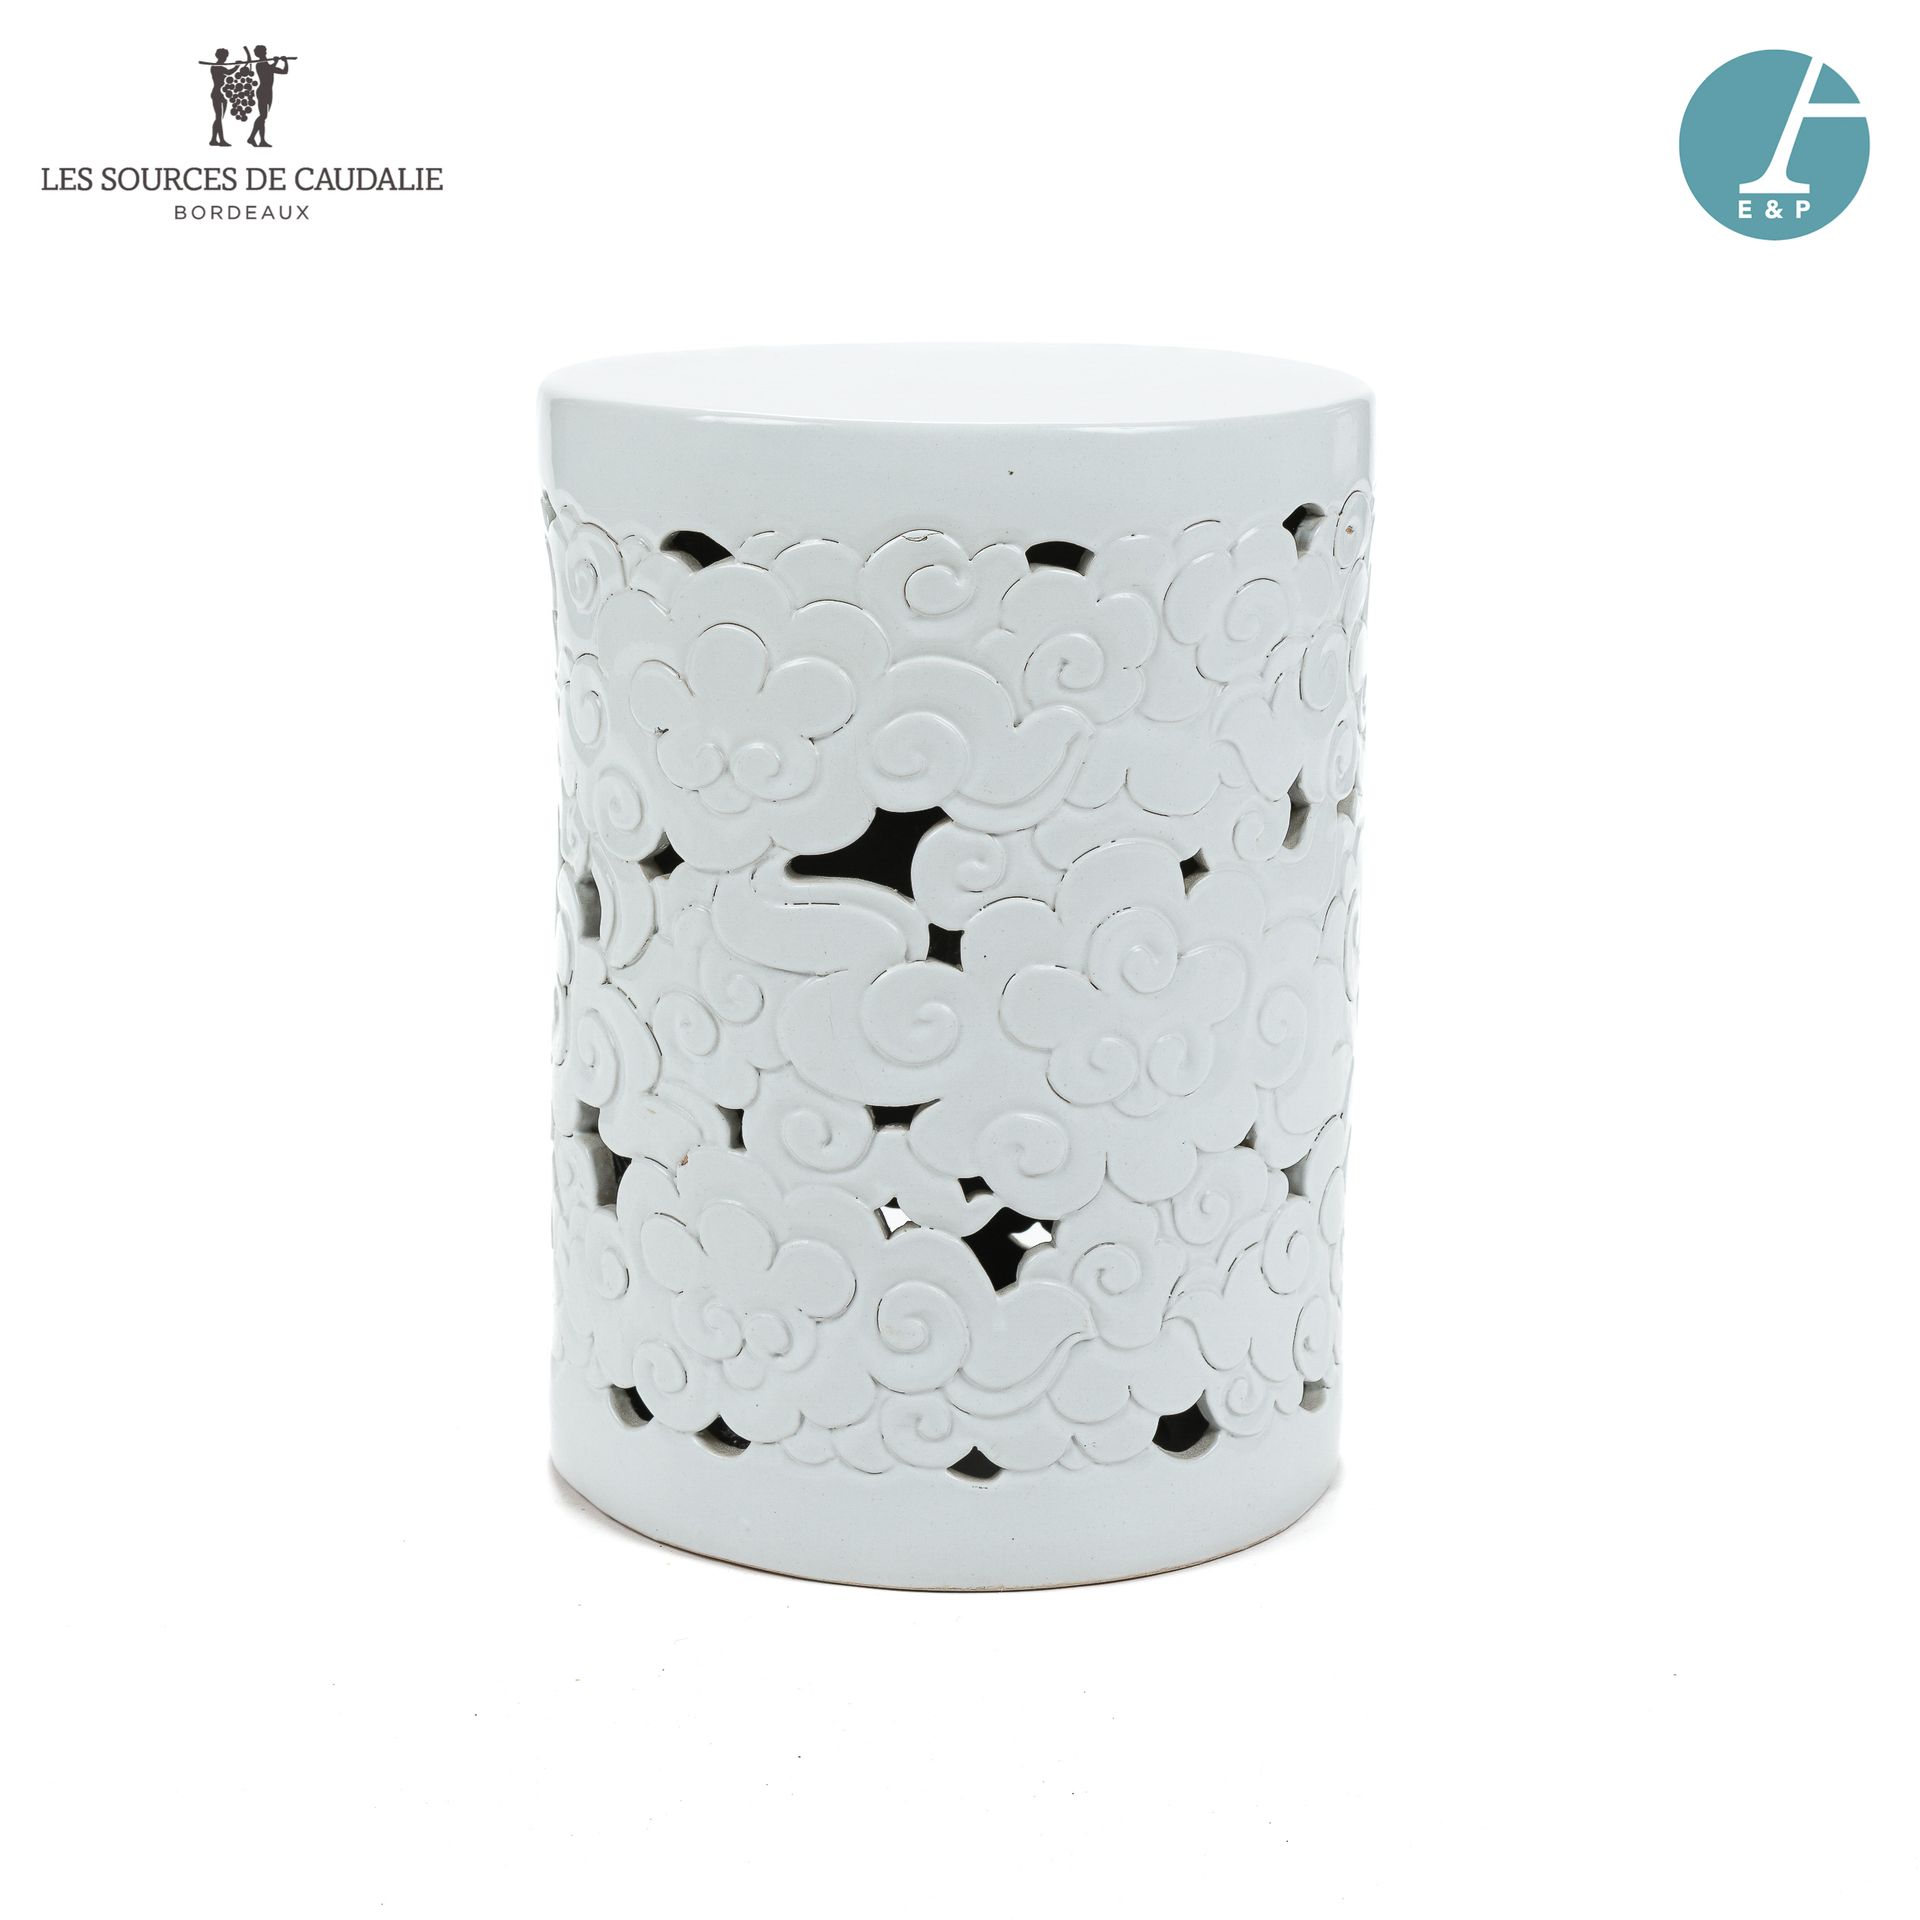 Null 从11号房间 "Les Vendanges "开始。

白色陶瓷凳子上有云彩装饰。

高：41厘米 - 直径：30厘米